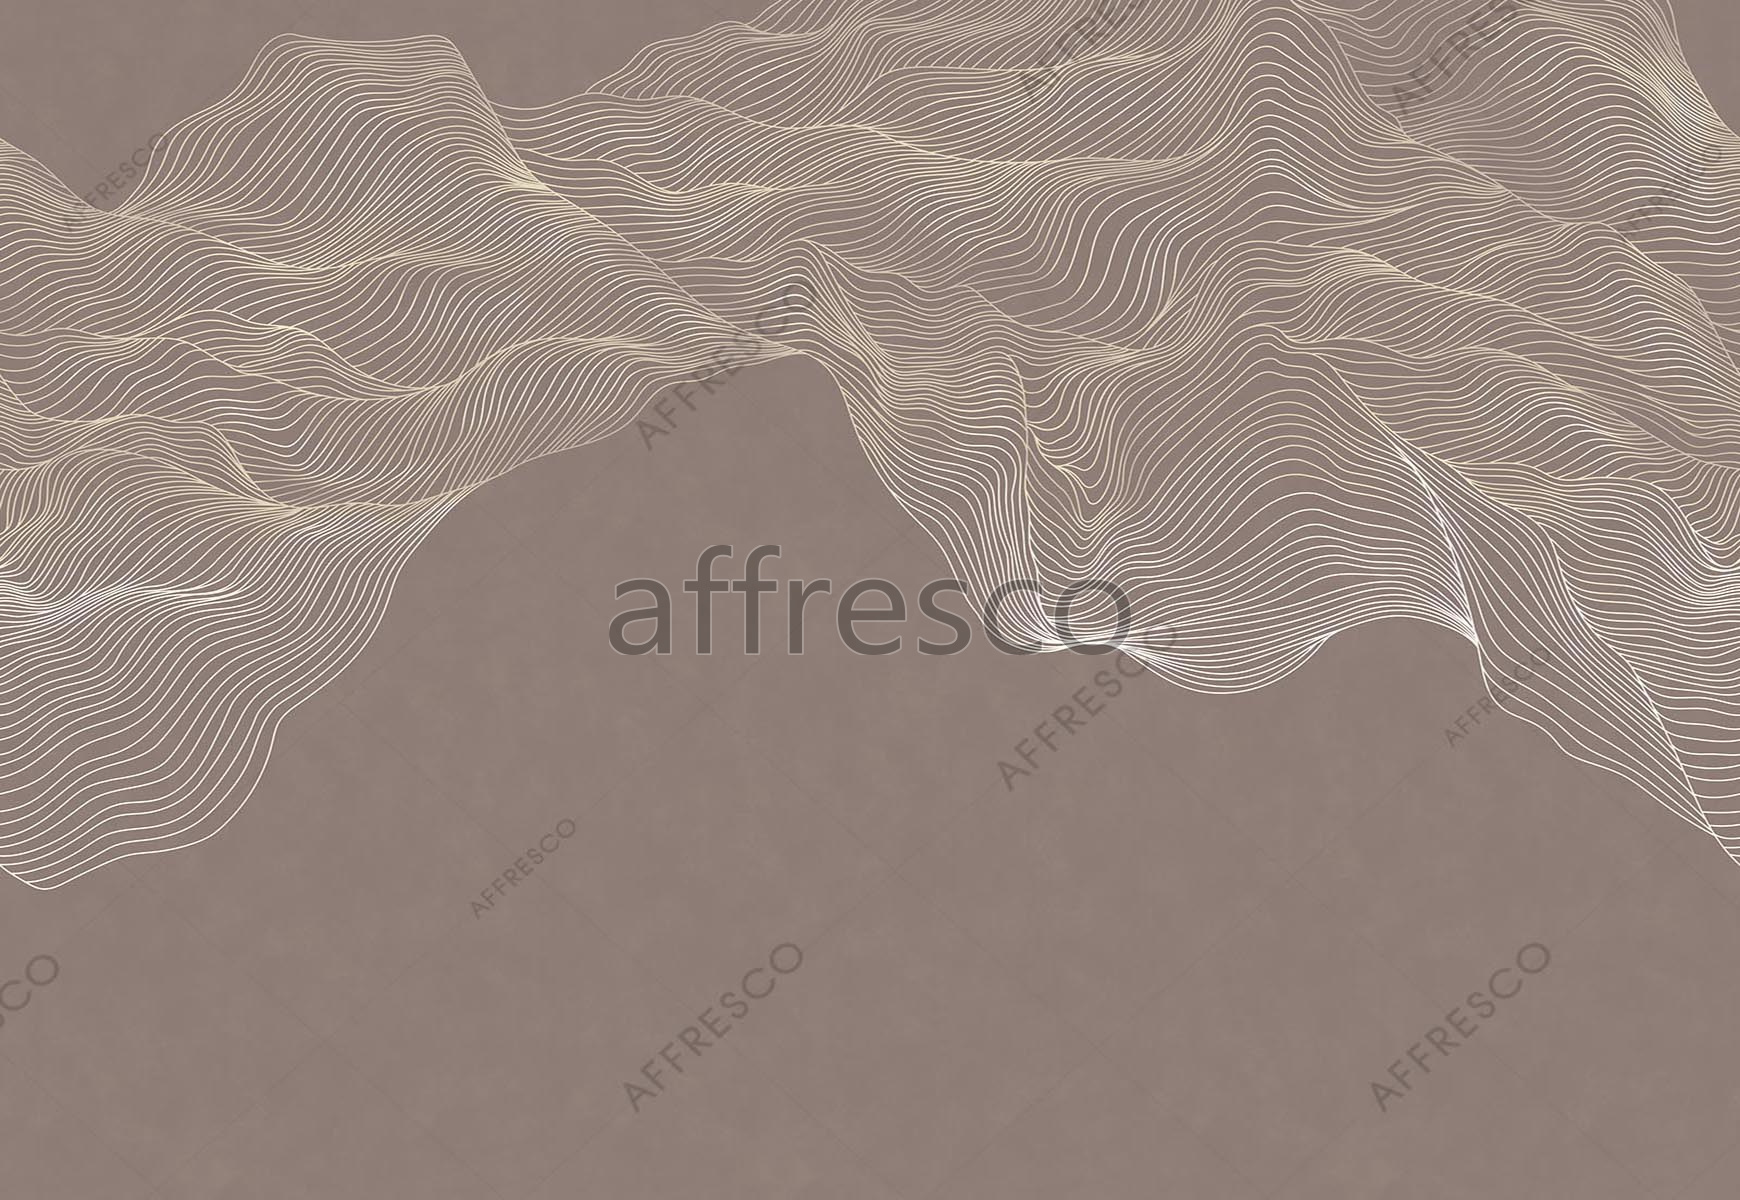 ID139147 | Textures | clouds graphics | Affresco Factory